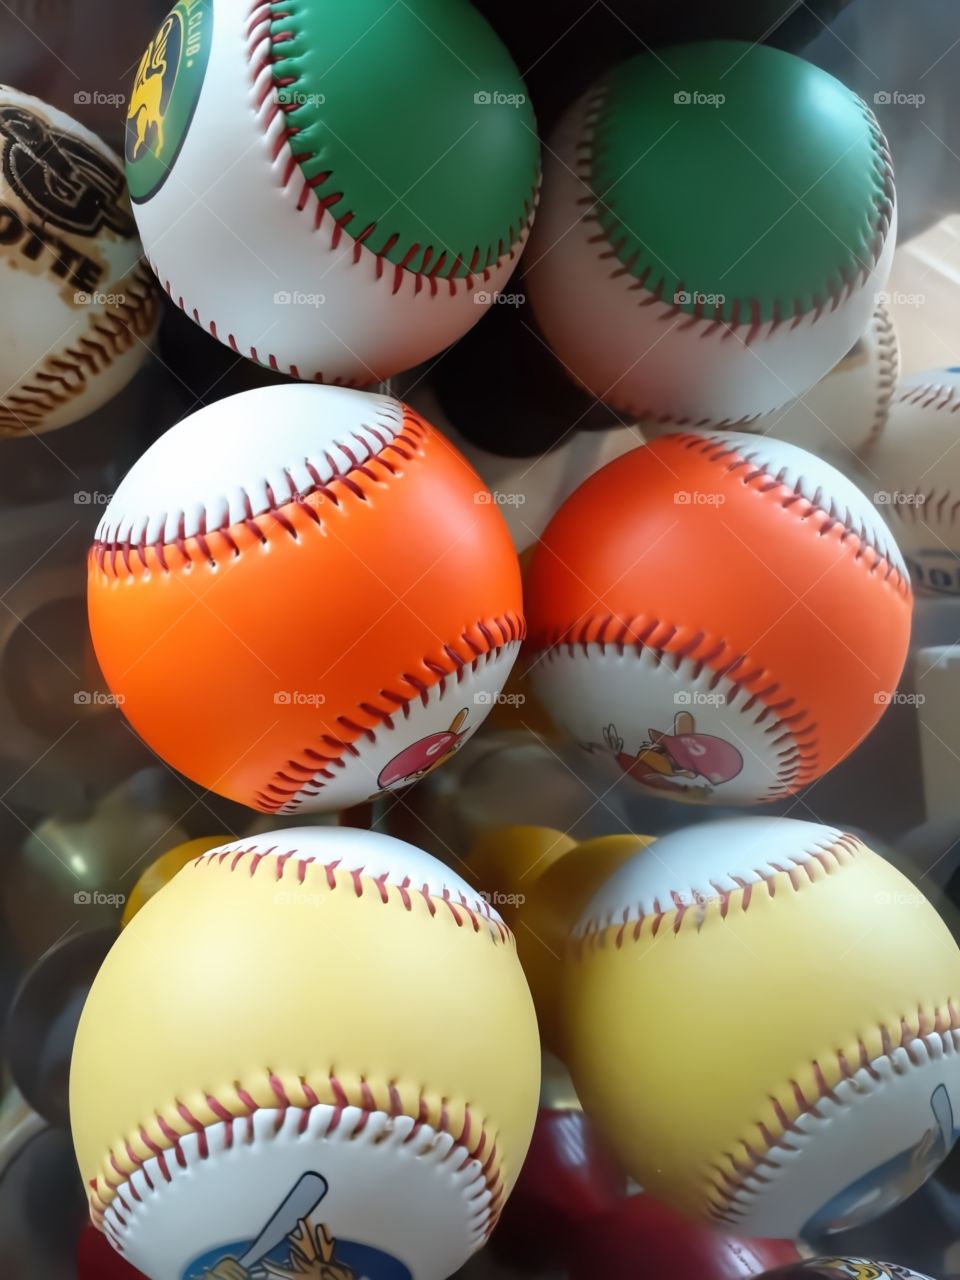 baseballs collections